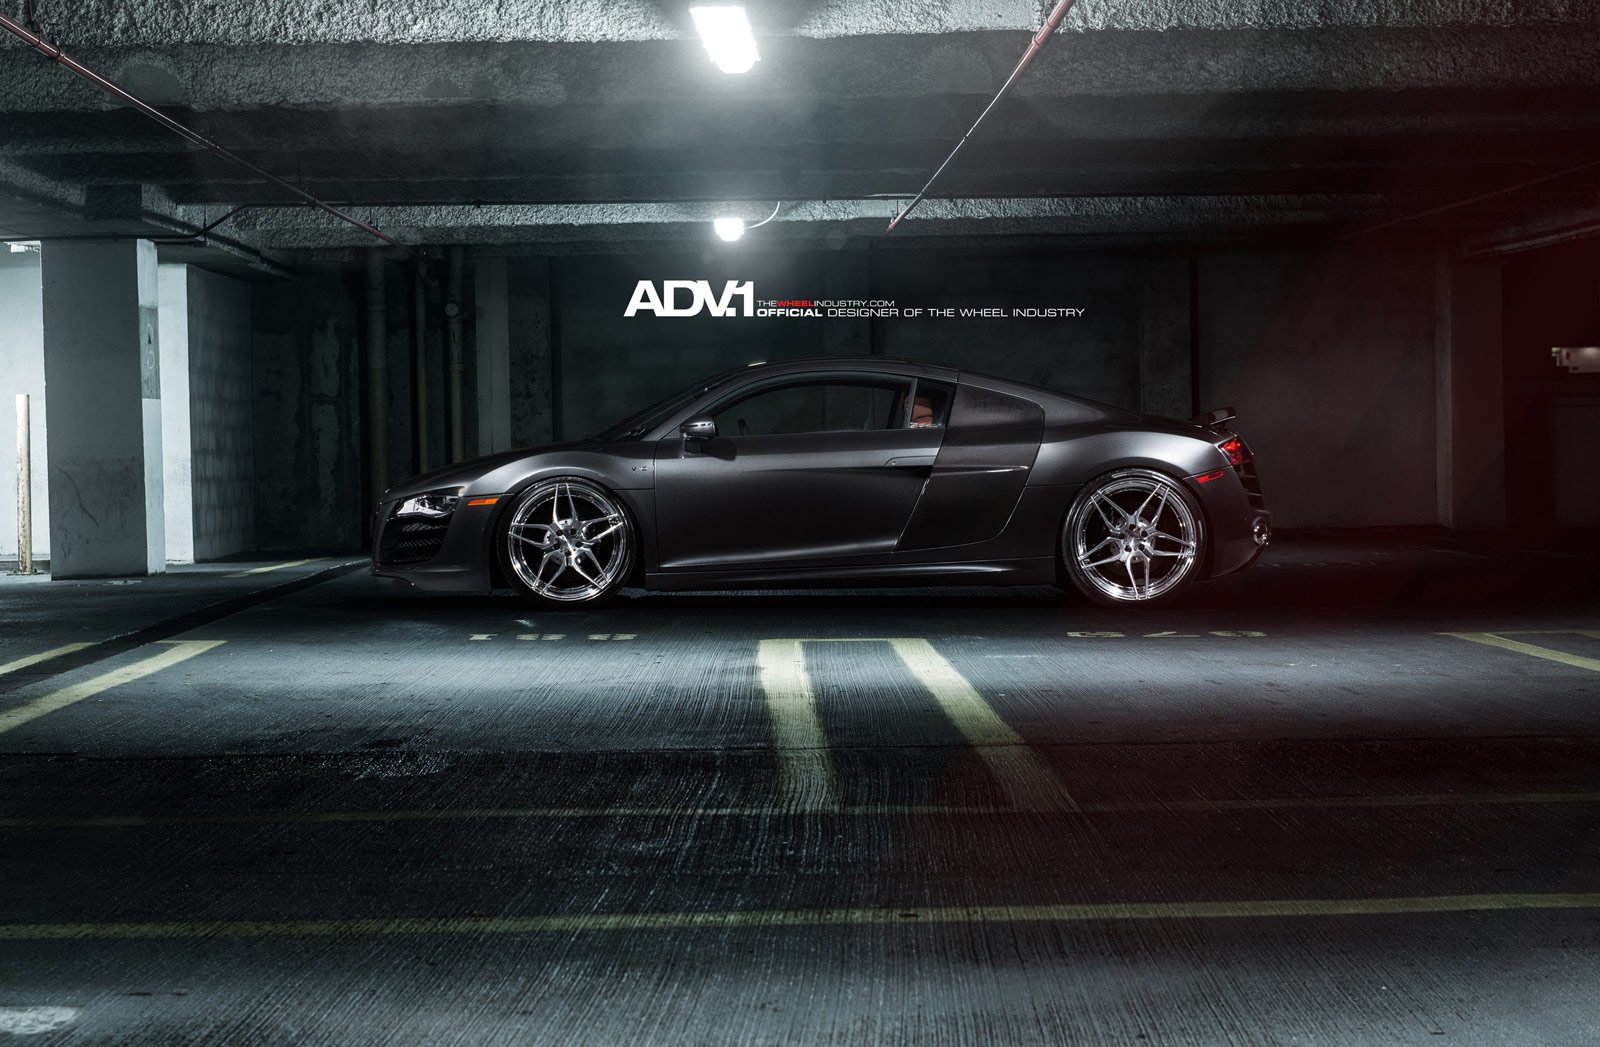 2014, Adv1, Supercars, Wheels, Tuning, Audi, R8 Wallpaper